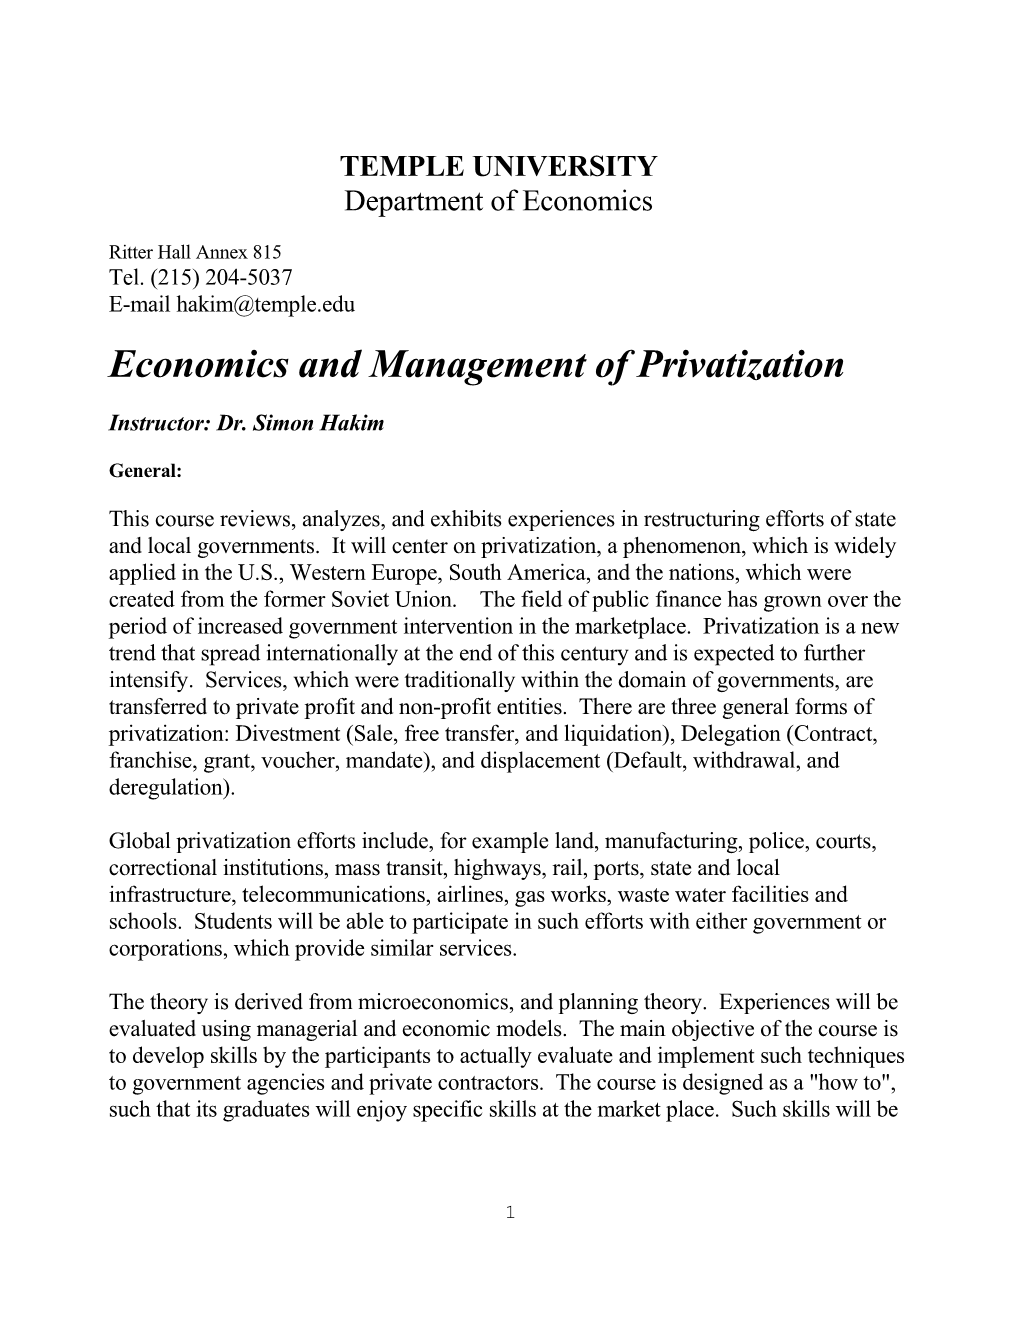 Economics and Management of Privatization